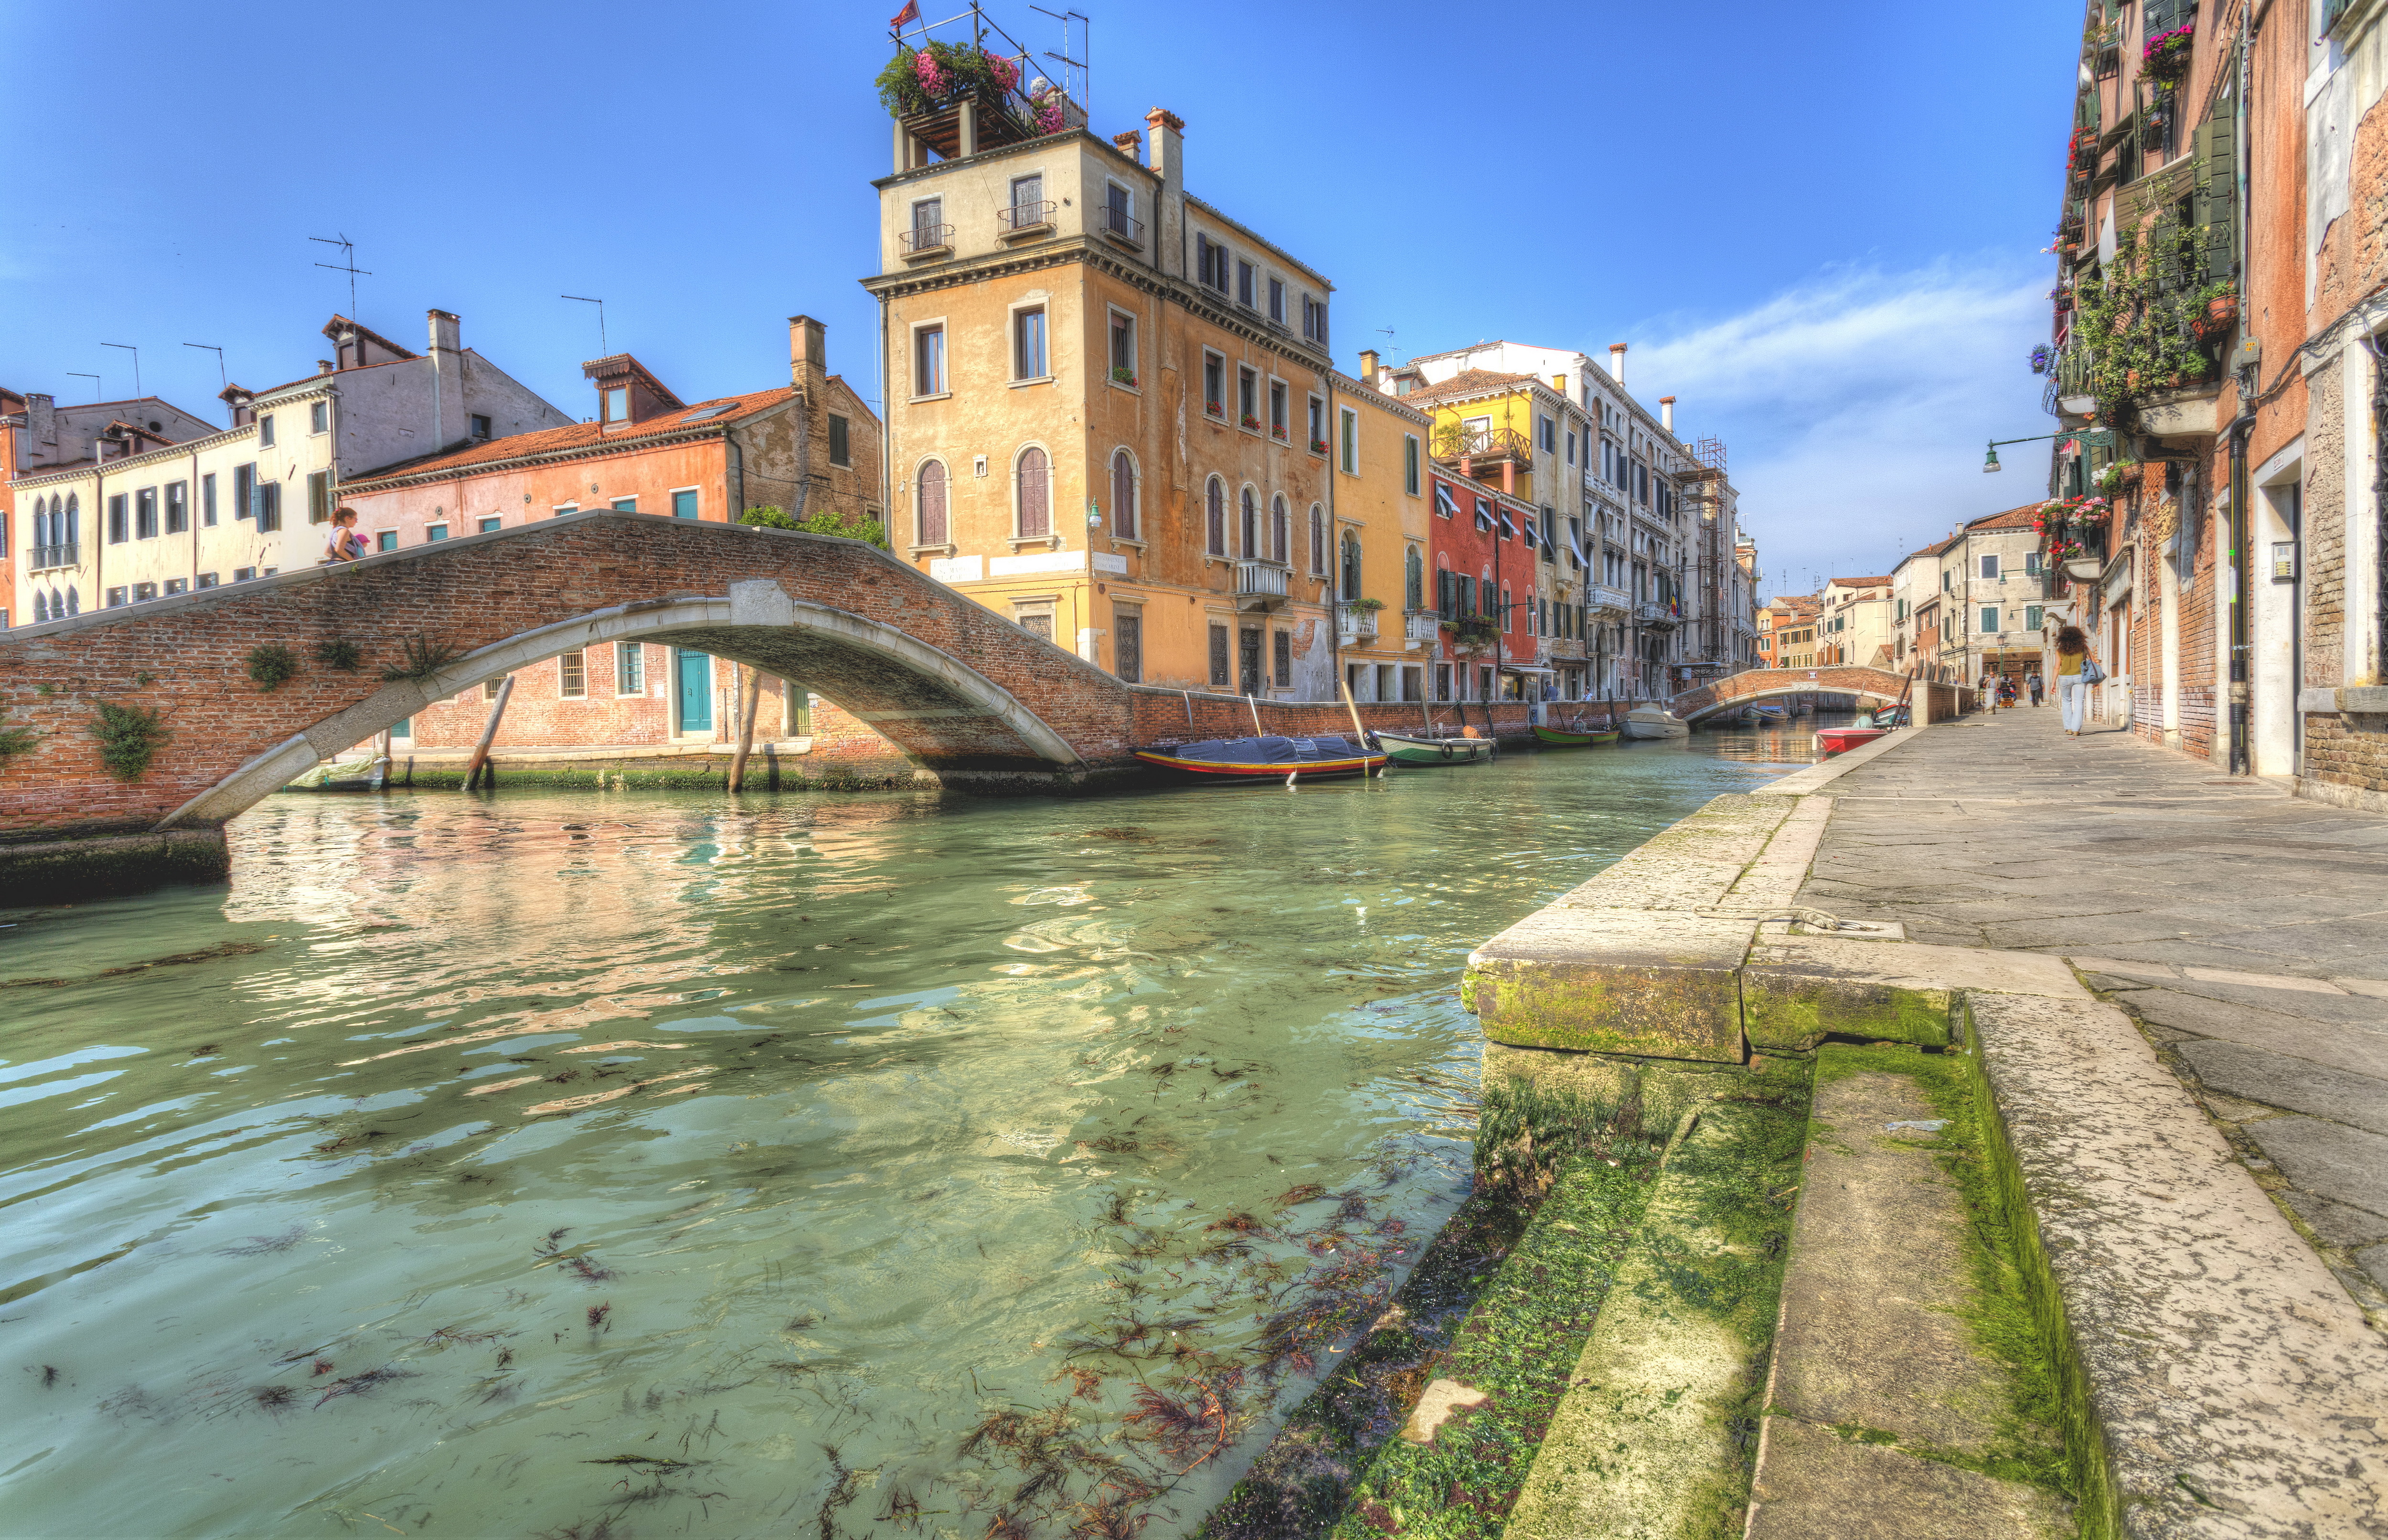 Река в венеции. Венеция итальянская улочка. Венеция Италия пейзажи. Венеция мост улочки. Италия водная улица в Венеции.